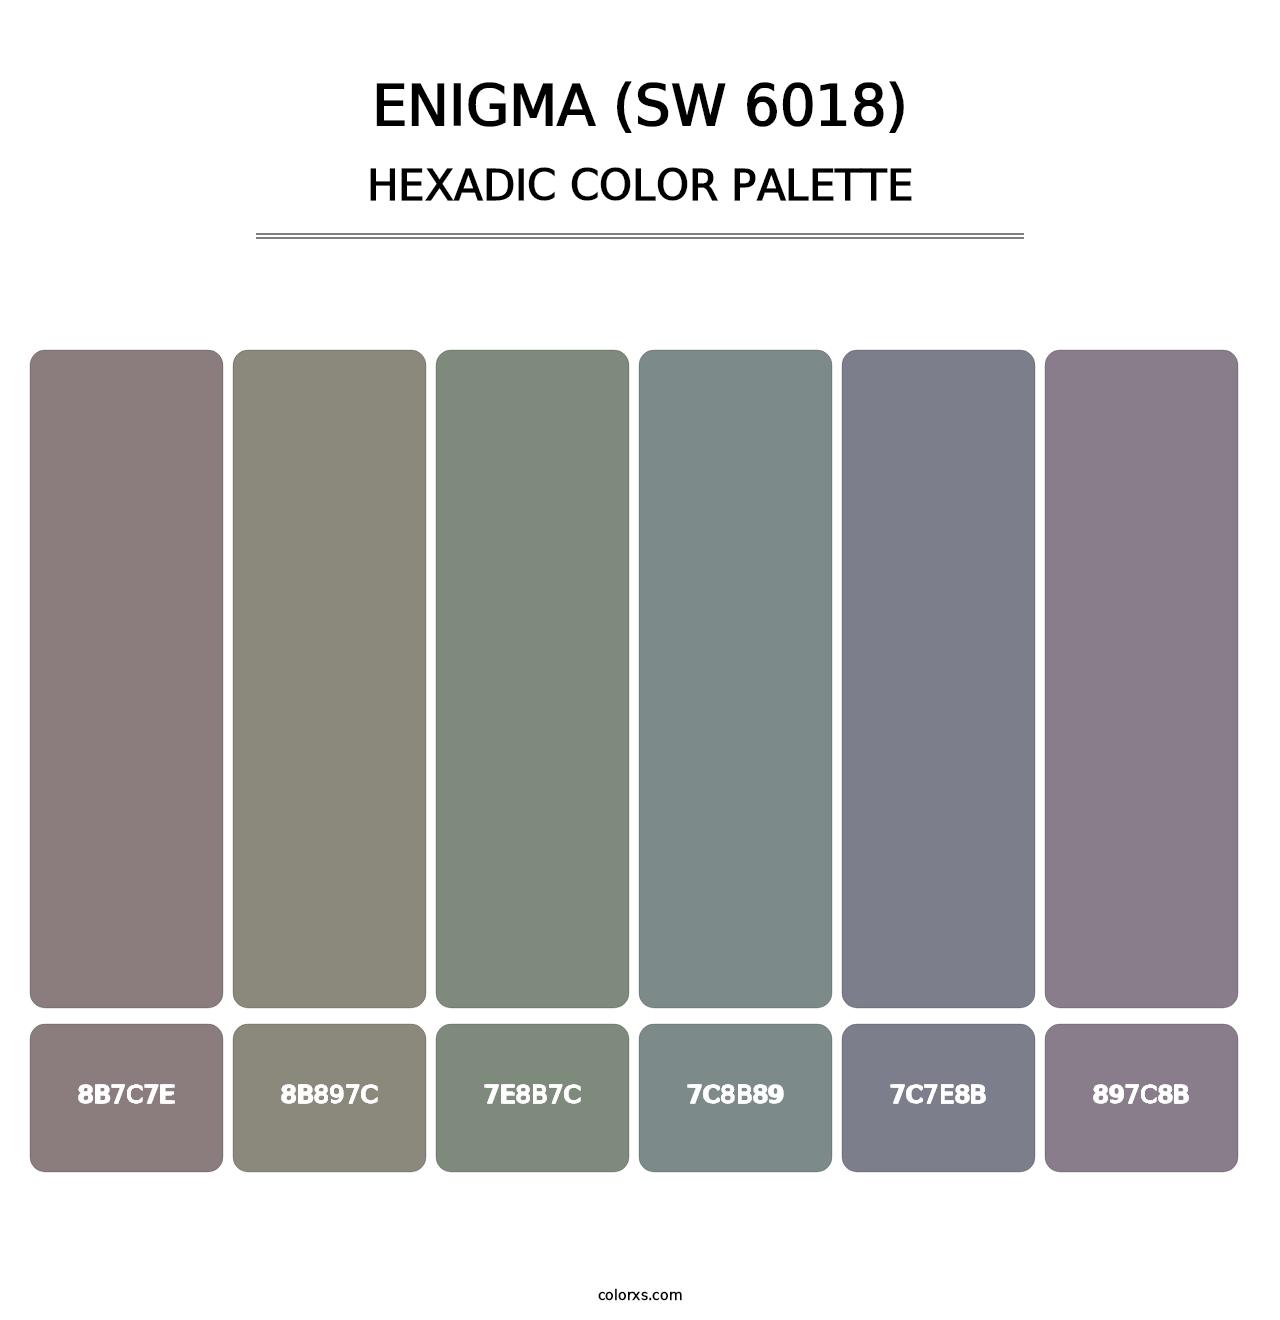 Enigma (SW 6018) - Hexadic Color Palette